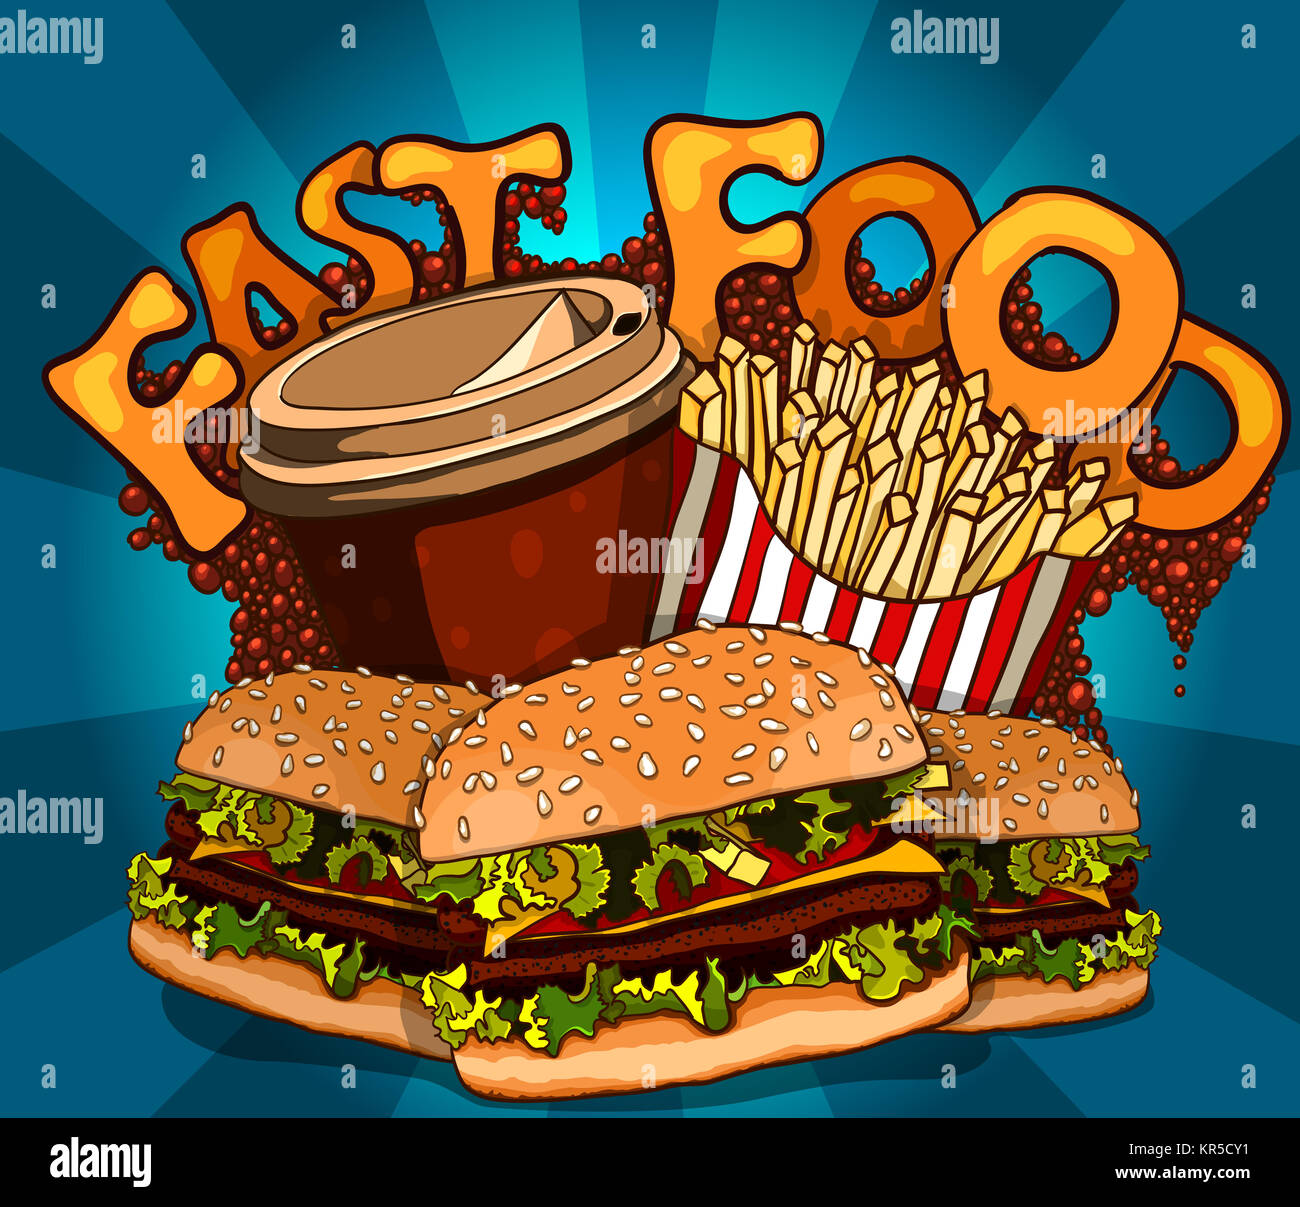 Vintage fast food background Stock Photo - Alamy